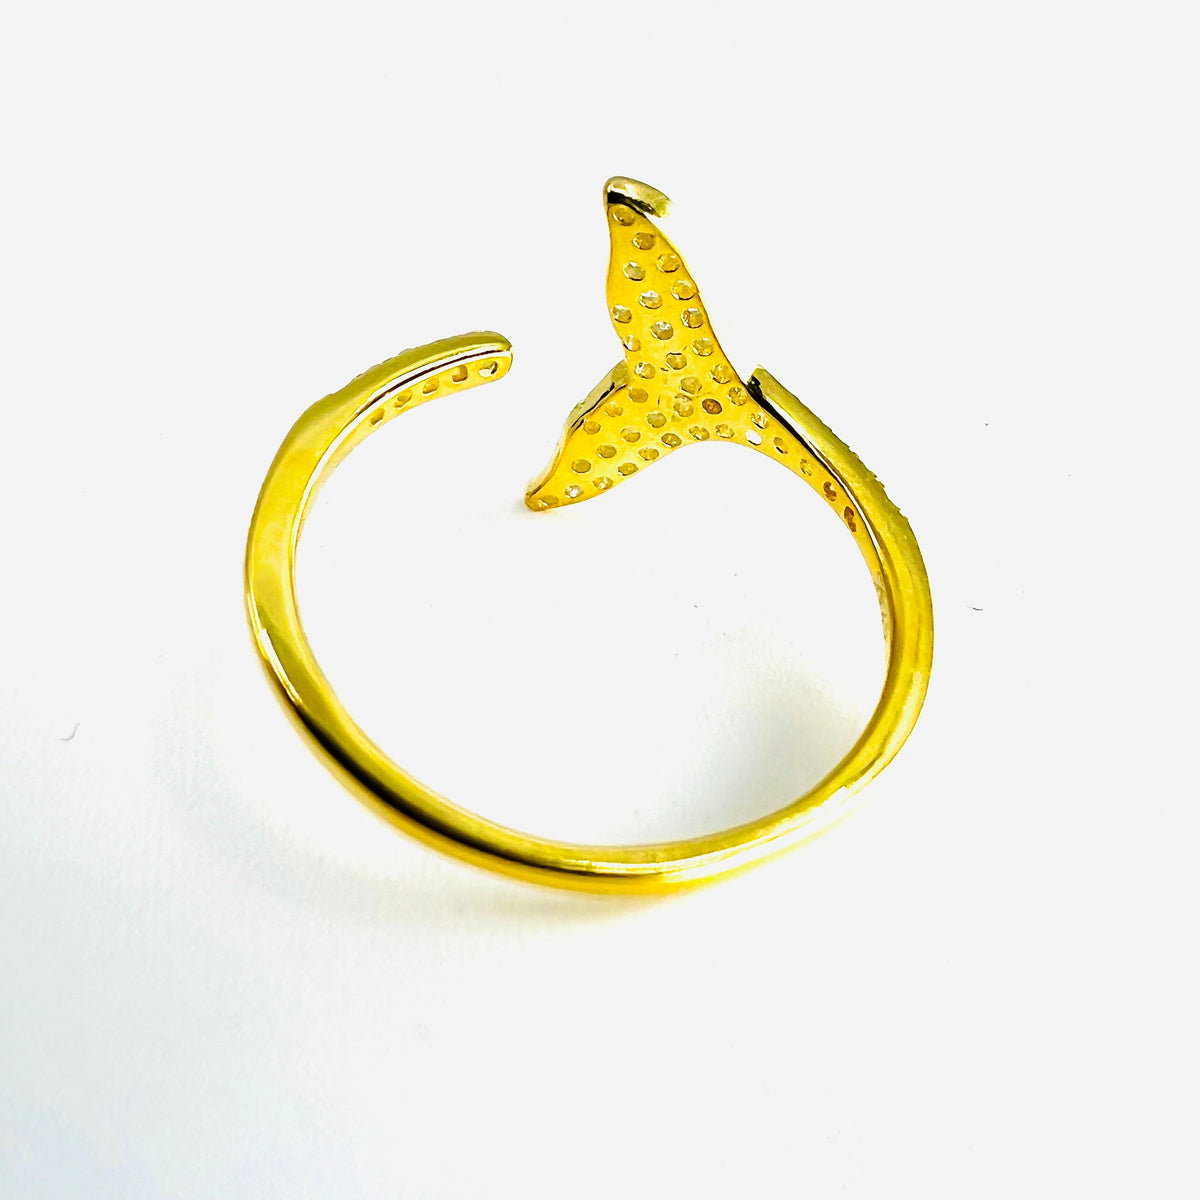 Mermaid Tail Adjustable Ring Jewelry Felix Z 